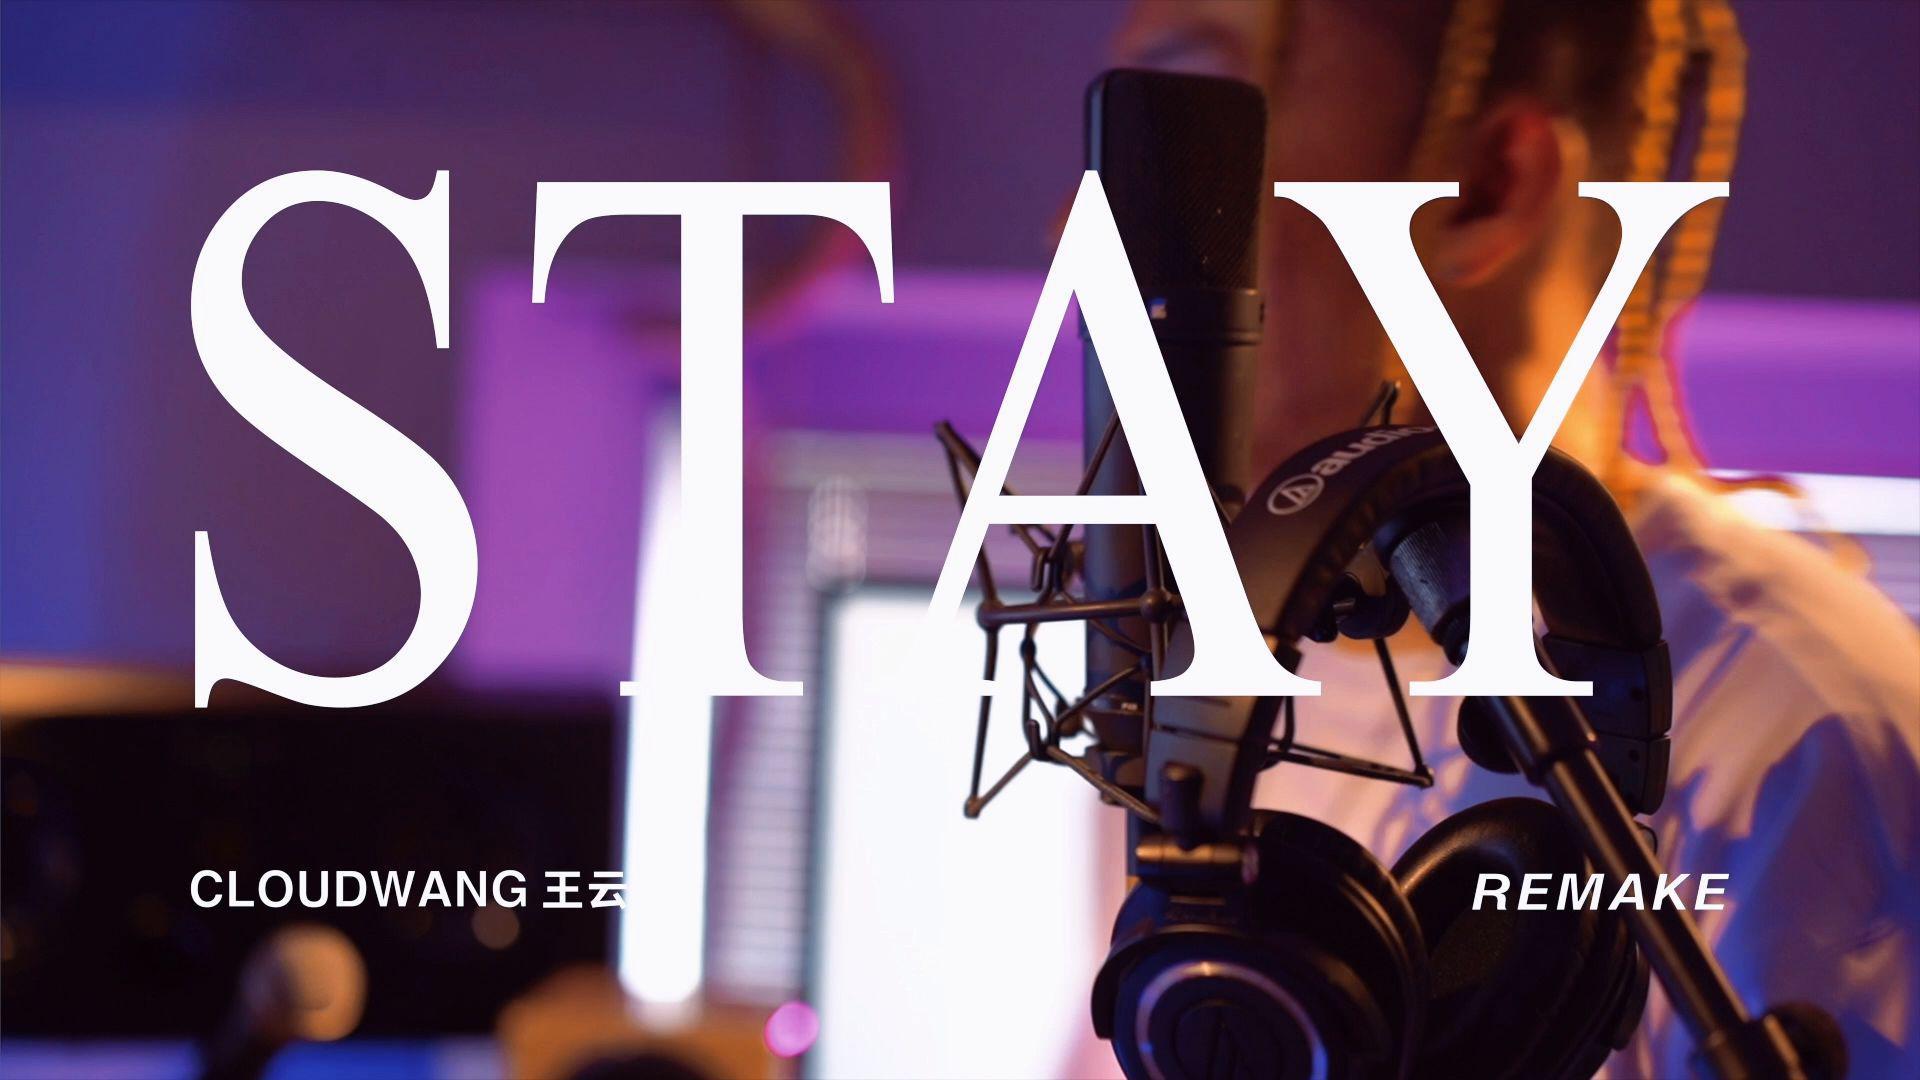 CLOUDWANG 王云 - 《STAY (REMAKE)》演唱版MV